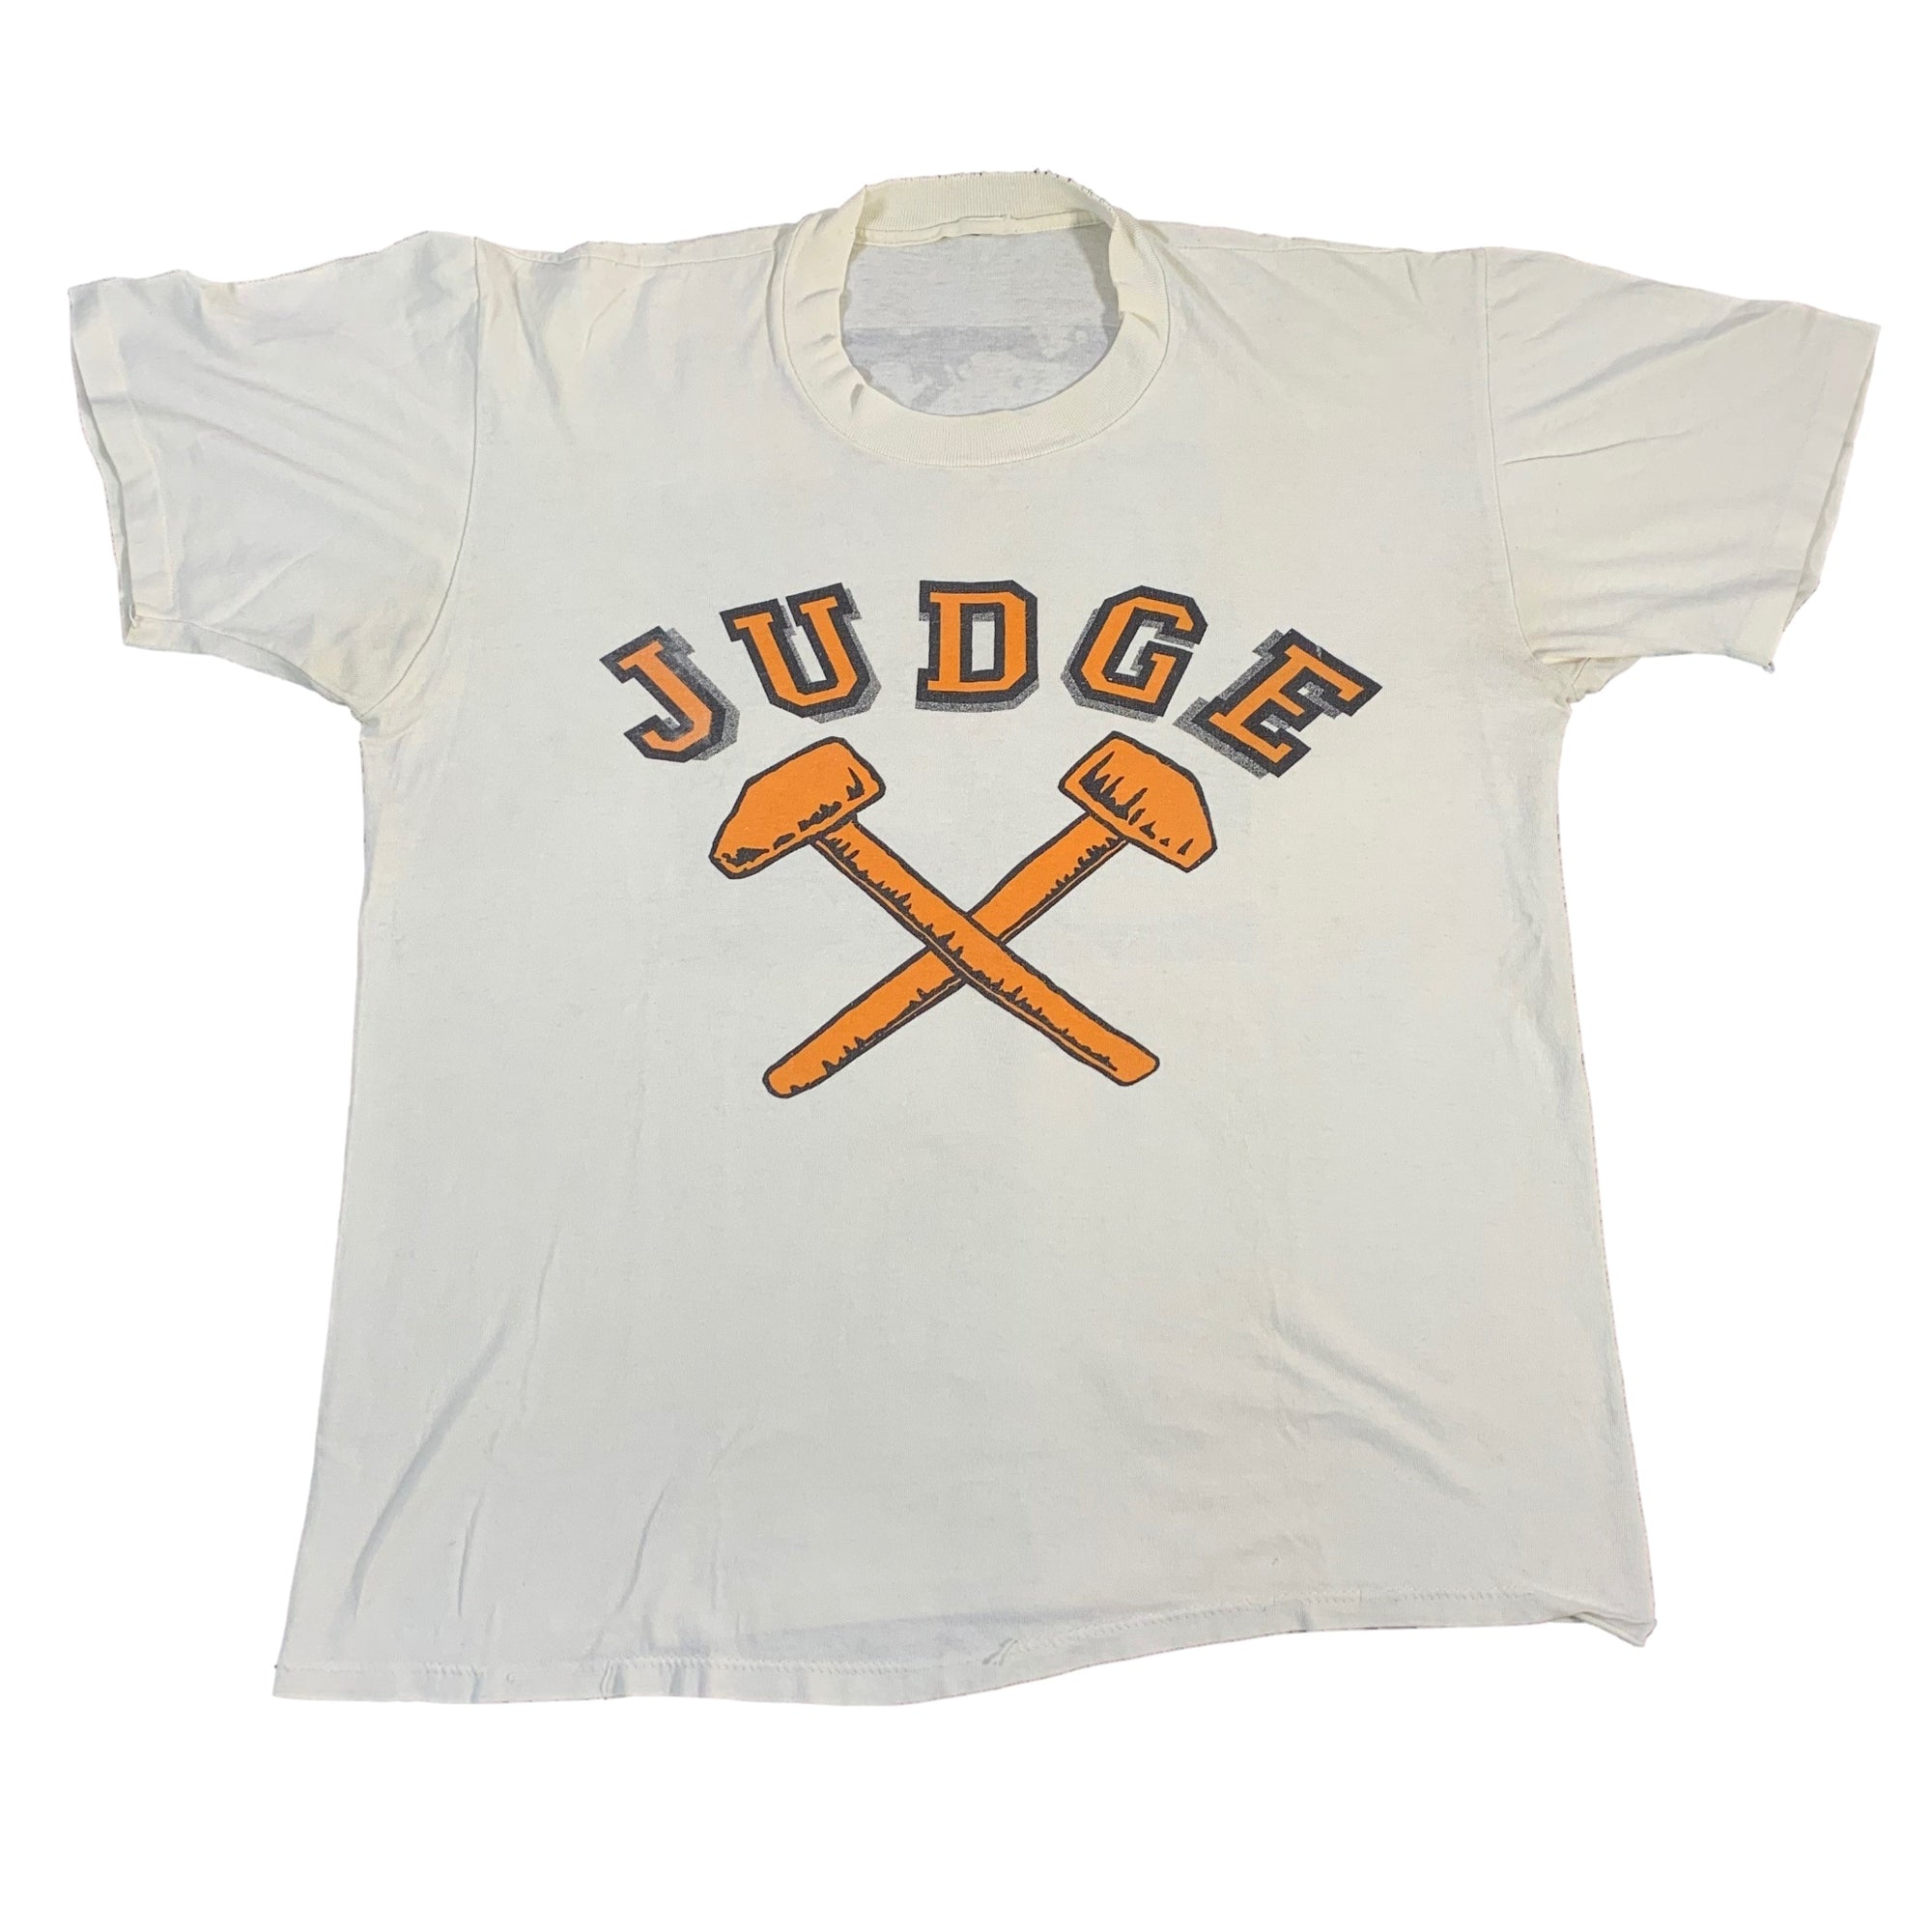 Vintage Judge "Bringing It Down" T-Shirt - jointcustodydc